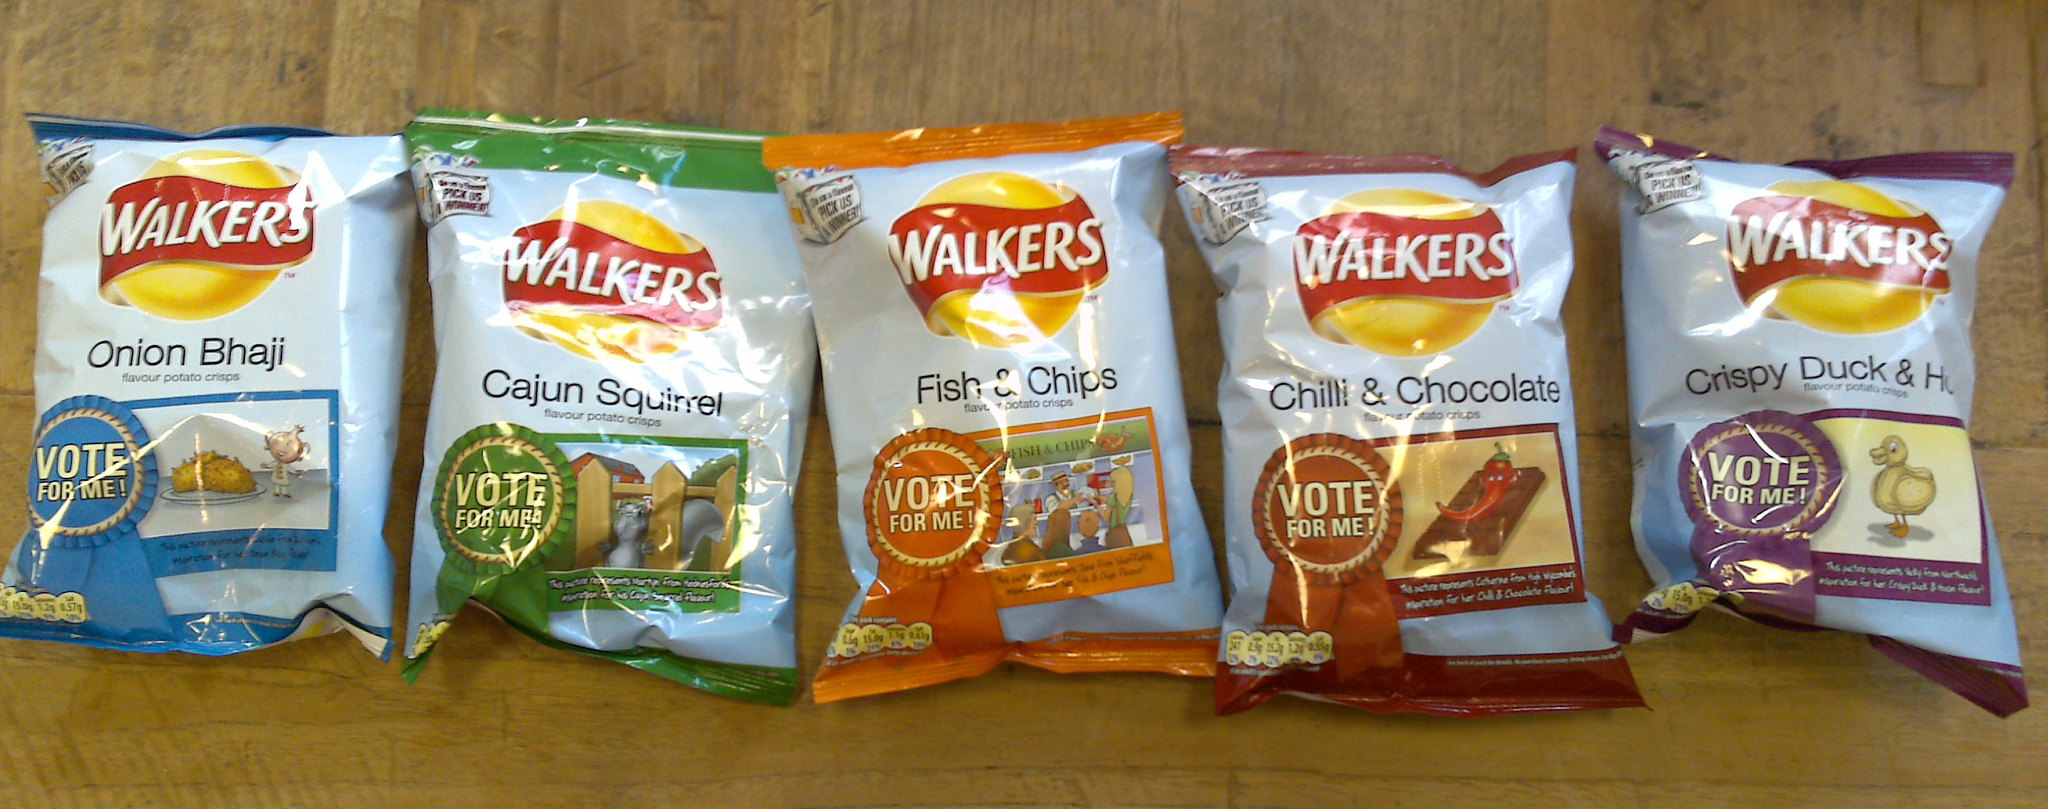 Walkers Chips